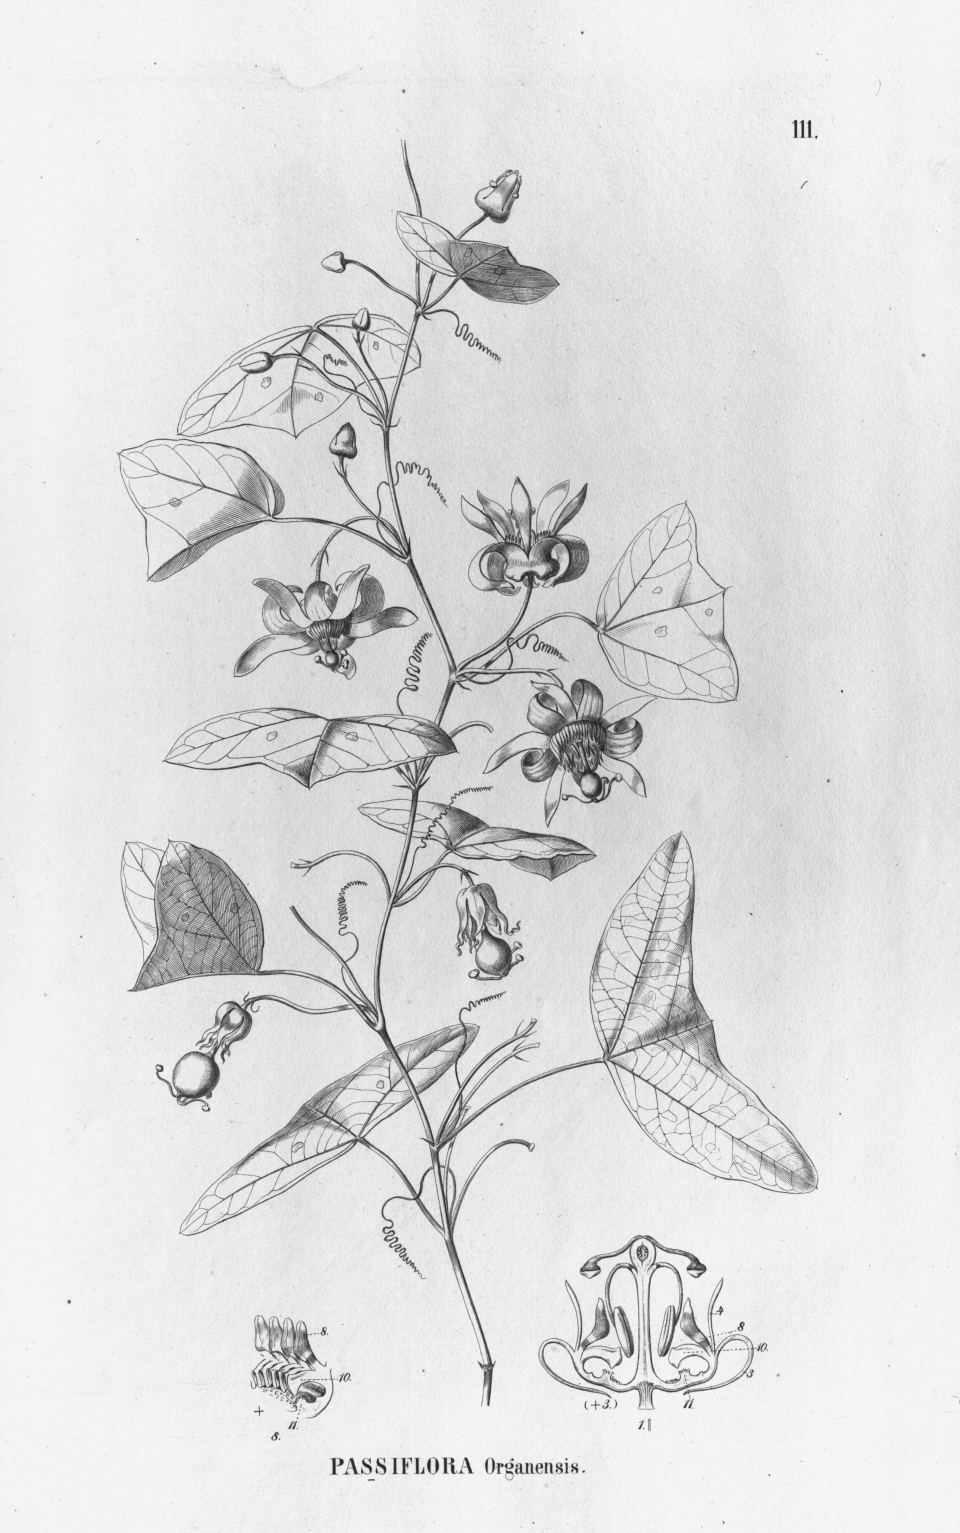 Passiflora organensis